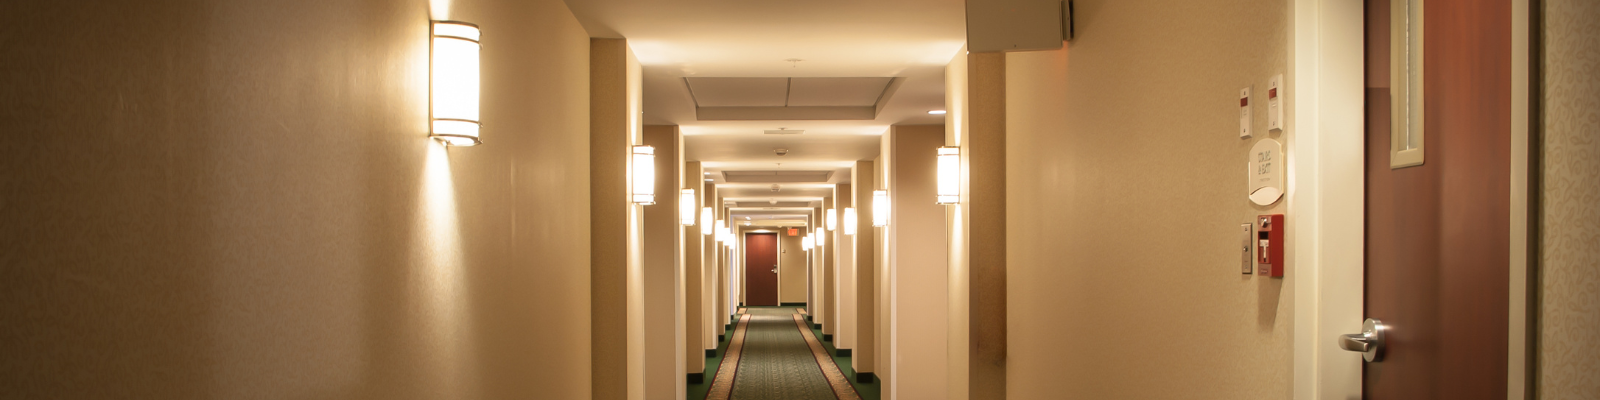 LED savings in hotel hallway lighting